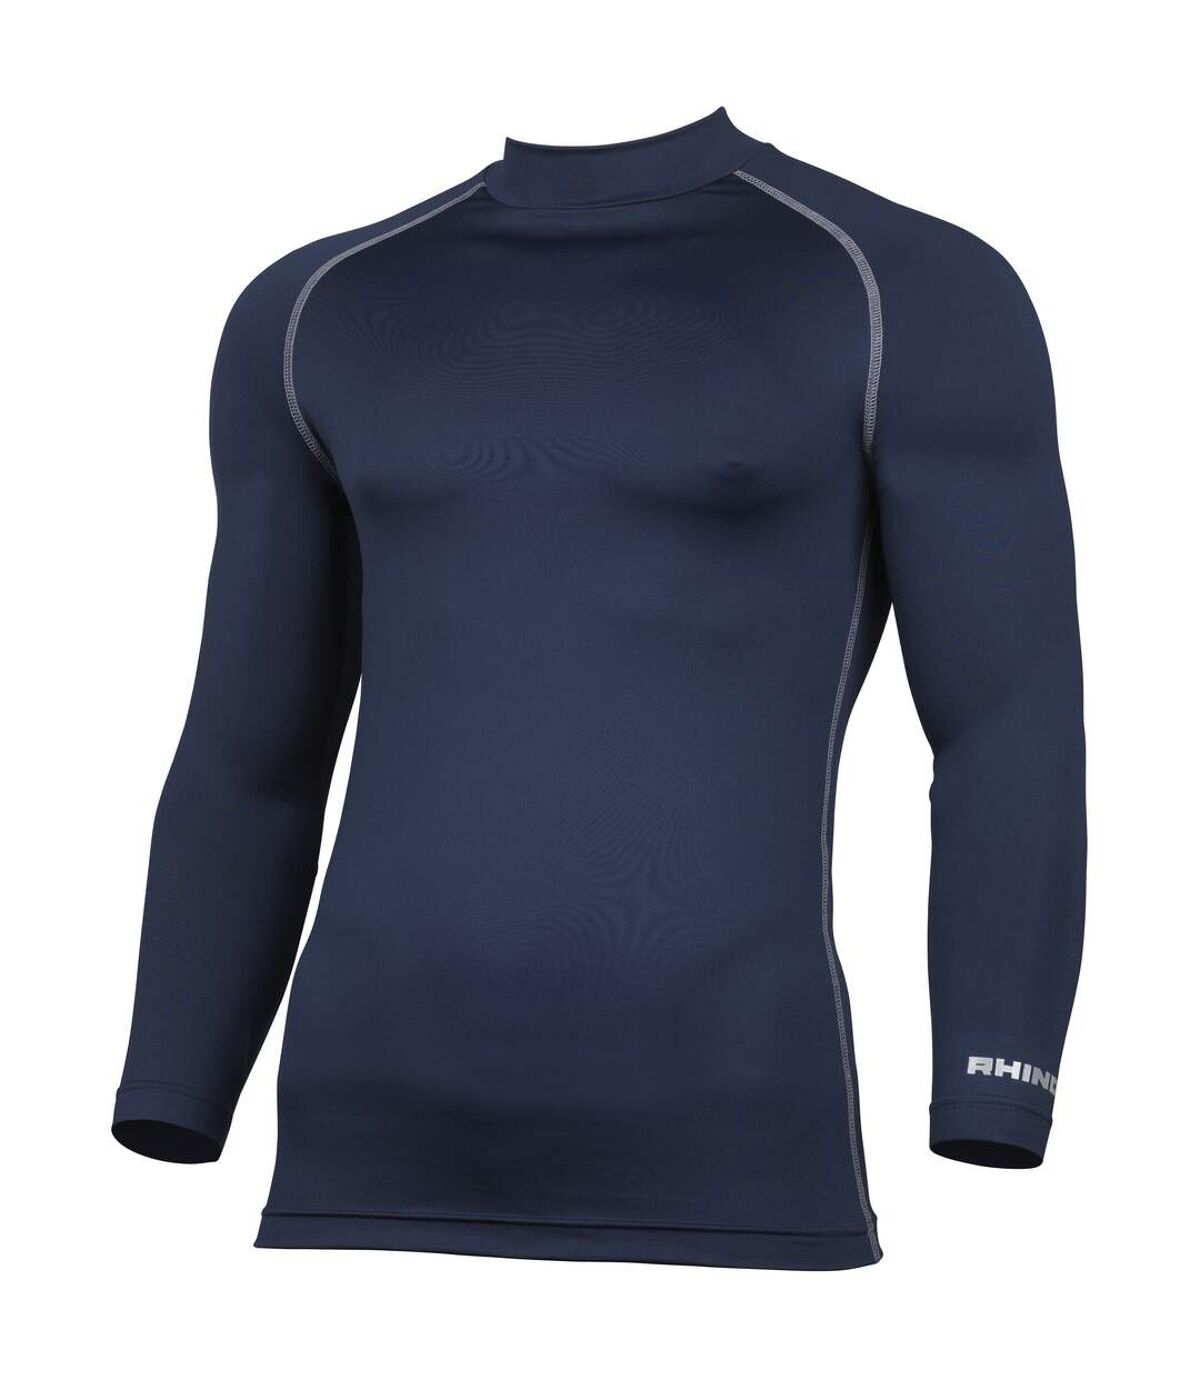 Rhino - T-shirt base layer à manches longues - Homme (Bleu marine) - UTRW1276